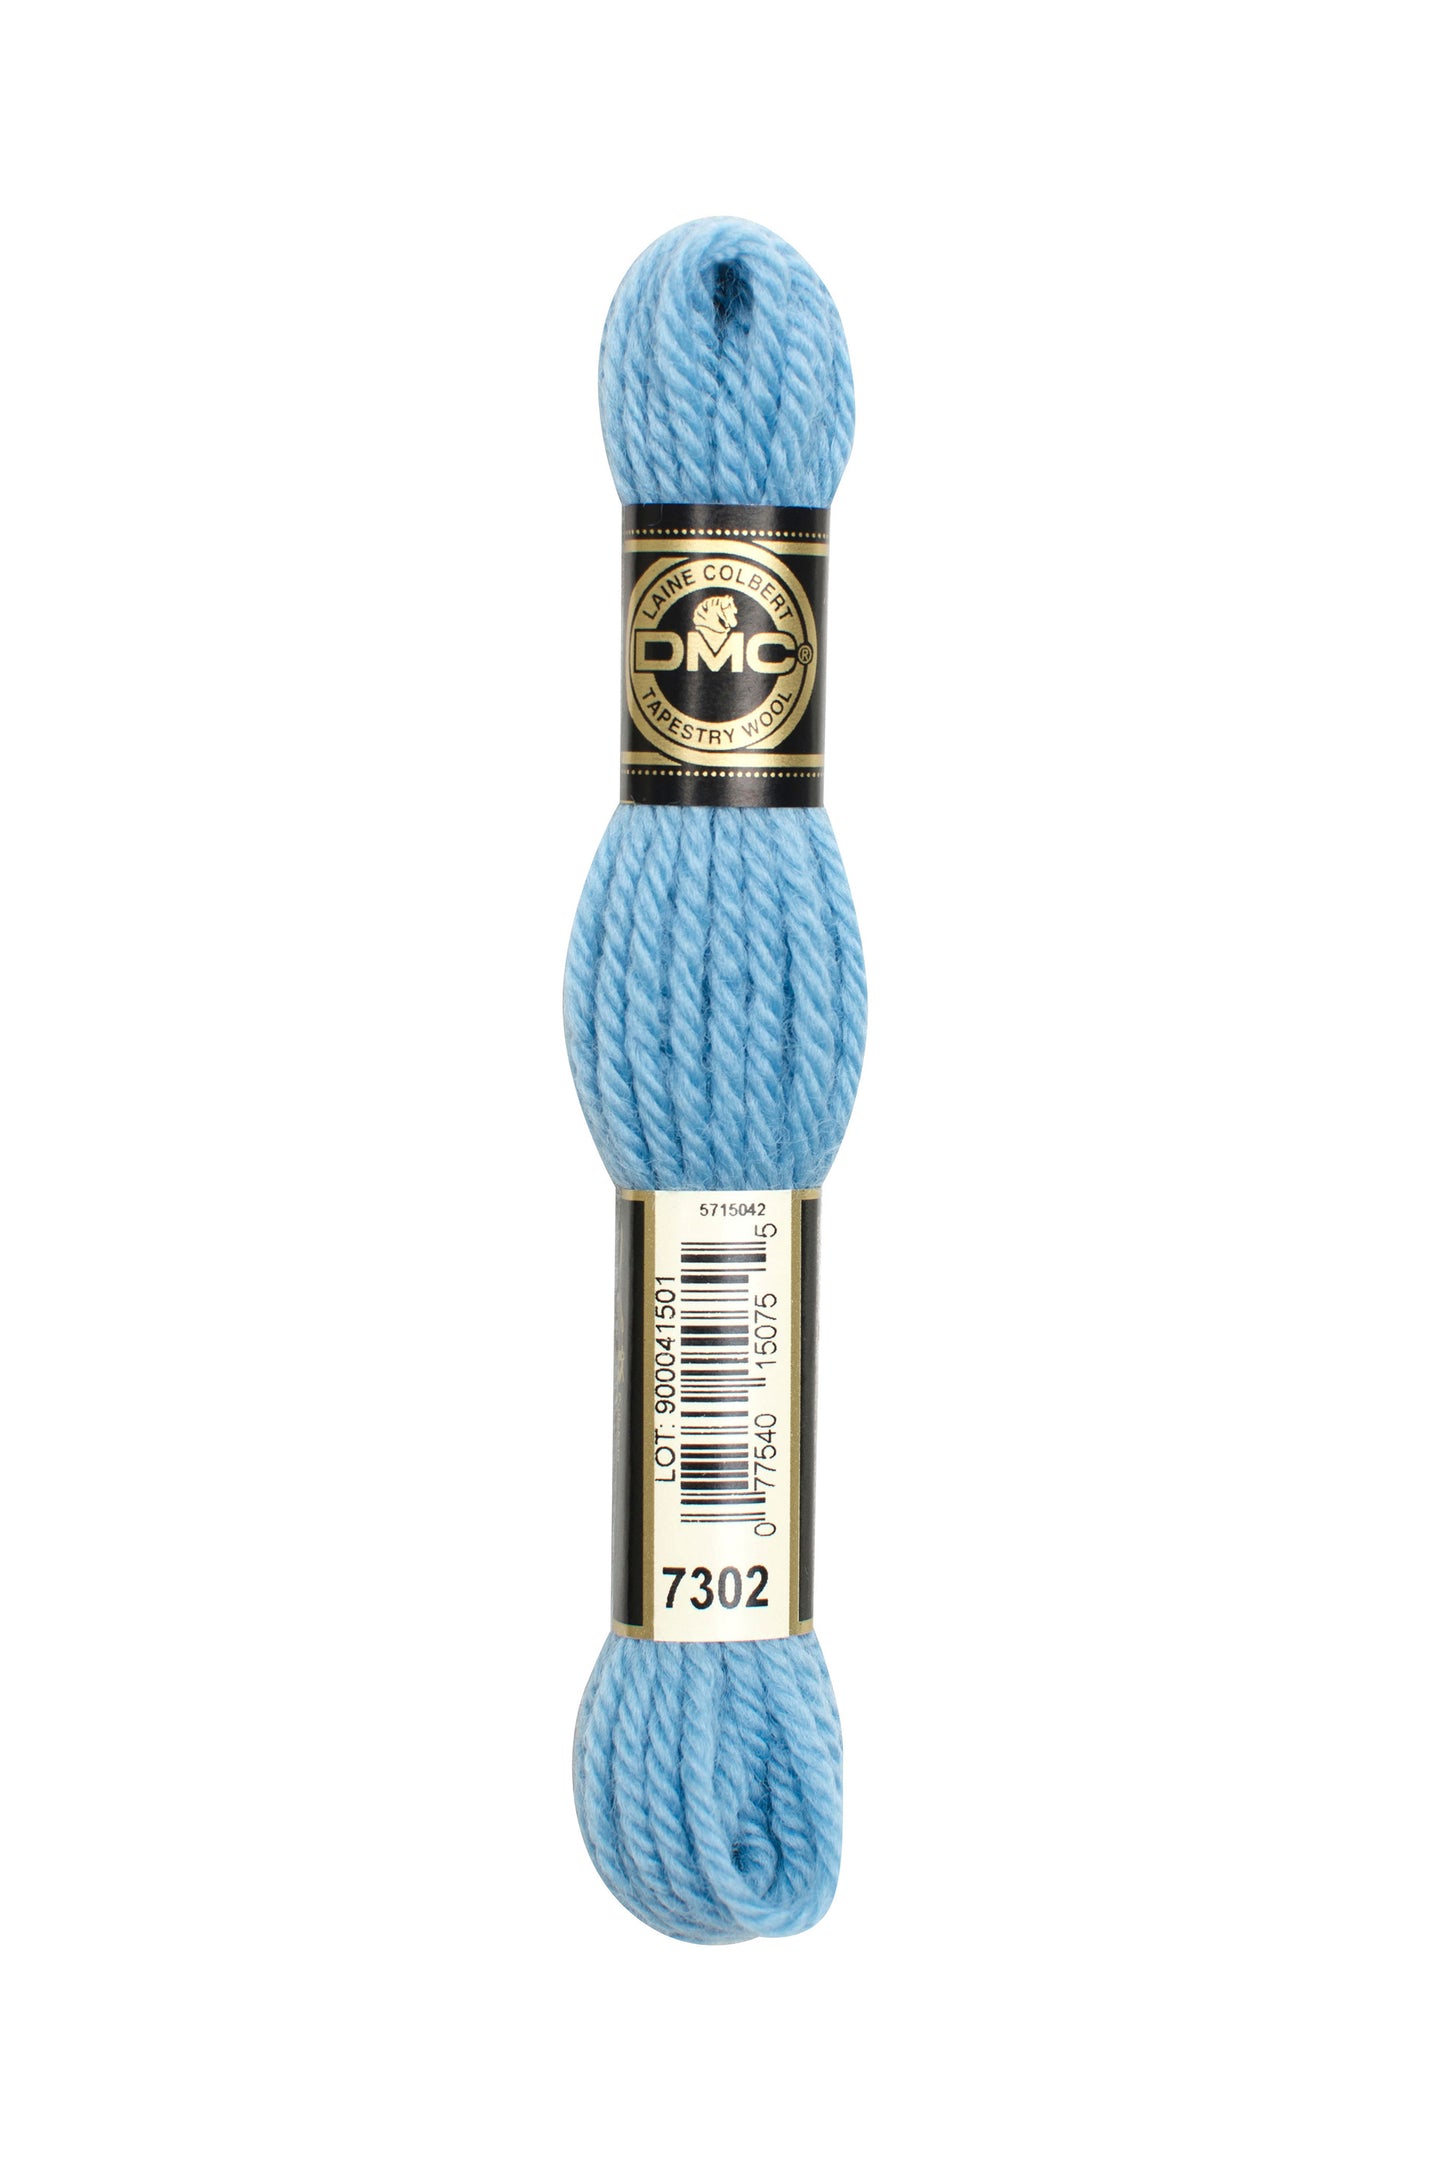 7302 – DMC Tapestry Wool